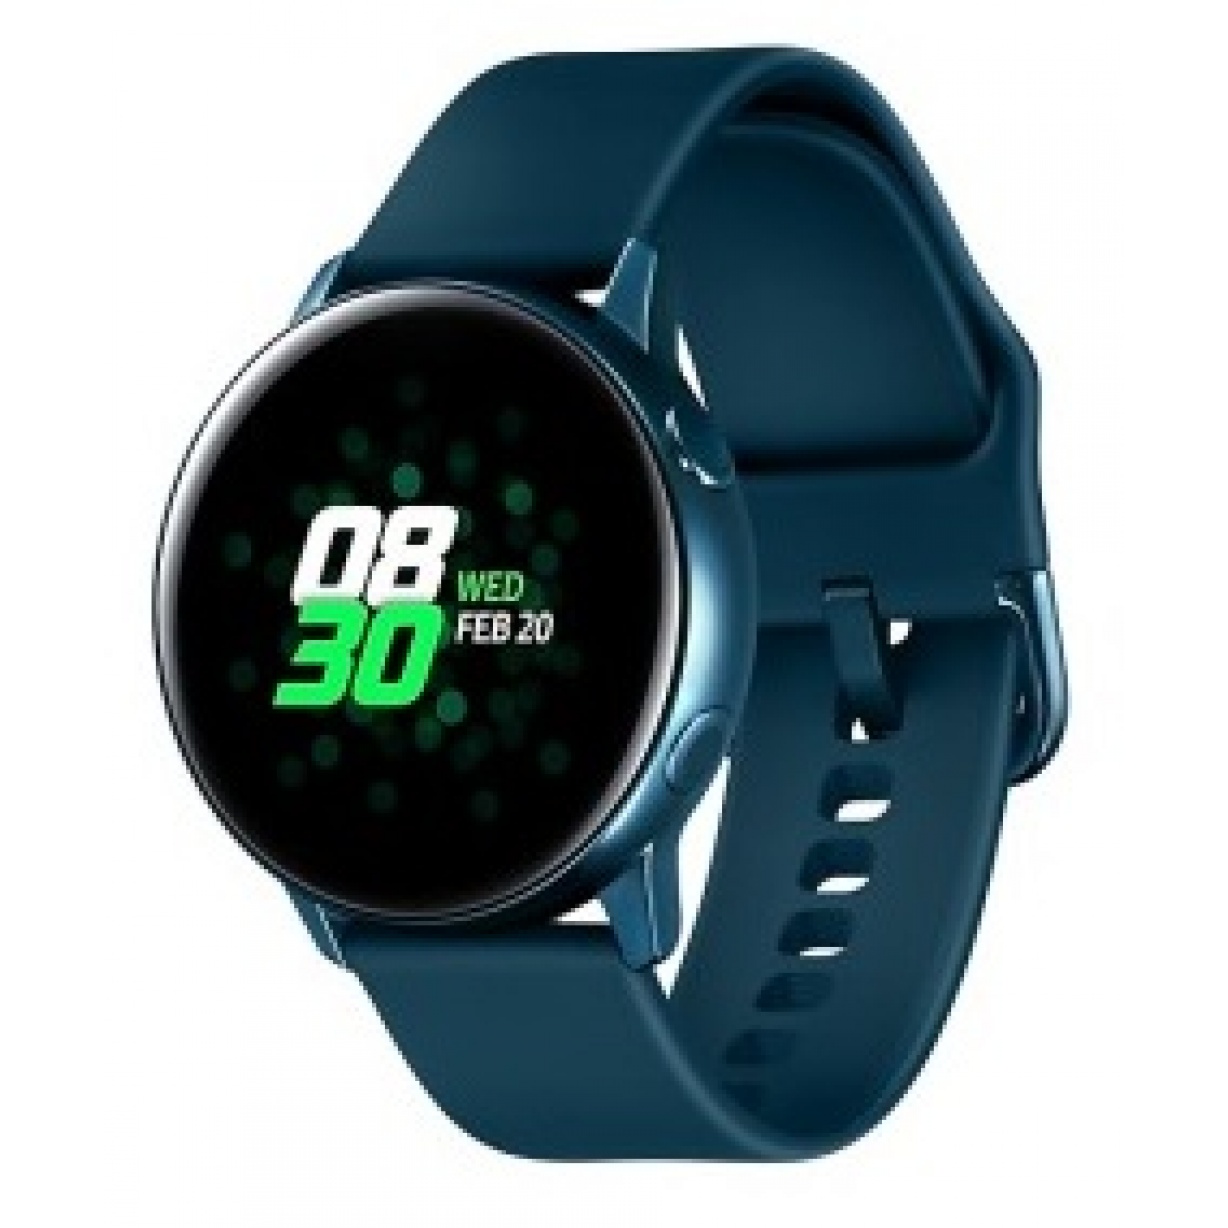 Samsung Galaxy Watch Active R500 Green